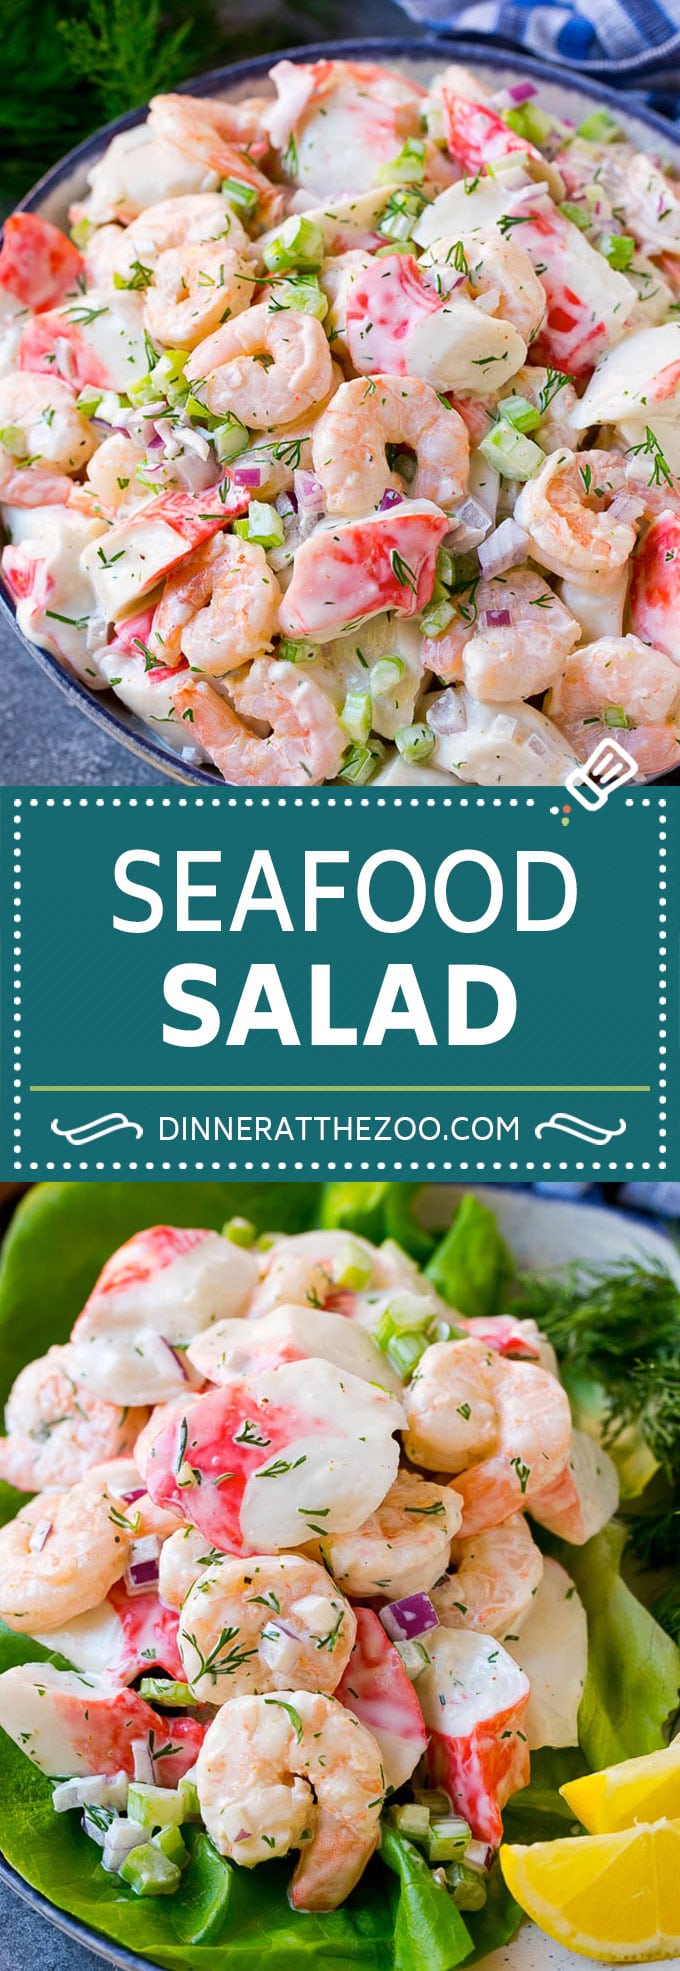 Seafood Salad Recipe | Shrimp Salad Recipe | Crab Salad #salad #shrimp #crab #seafood #lunch #lowcarb #dinner #dinneratthezoo